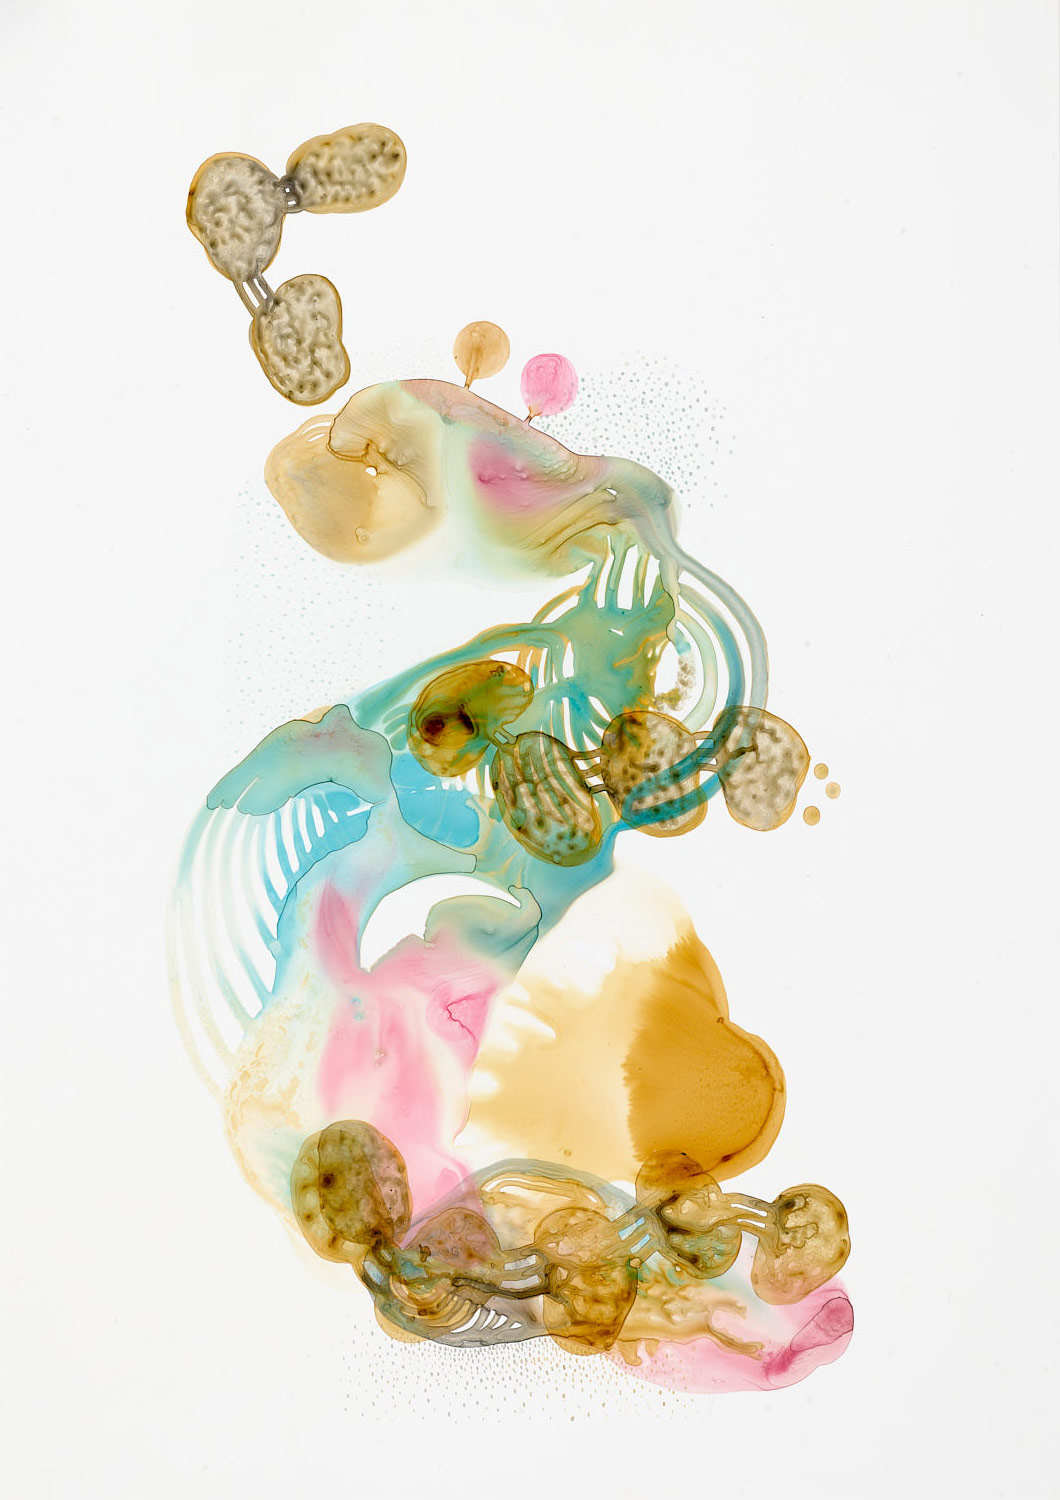 Michelle Concepción, Whimsical 14, acrylic on paper, 34 cm x 48 cm, 2013